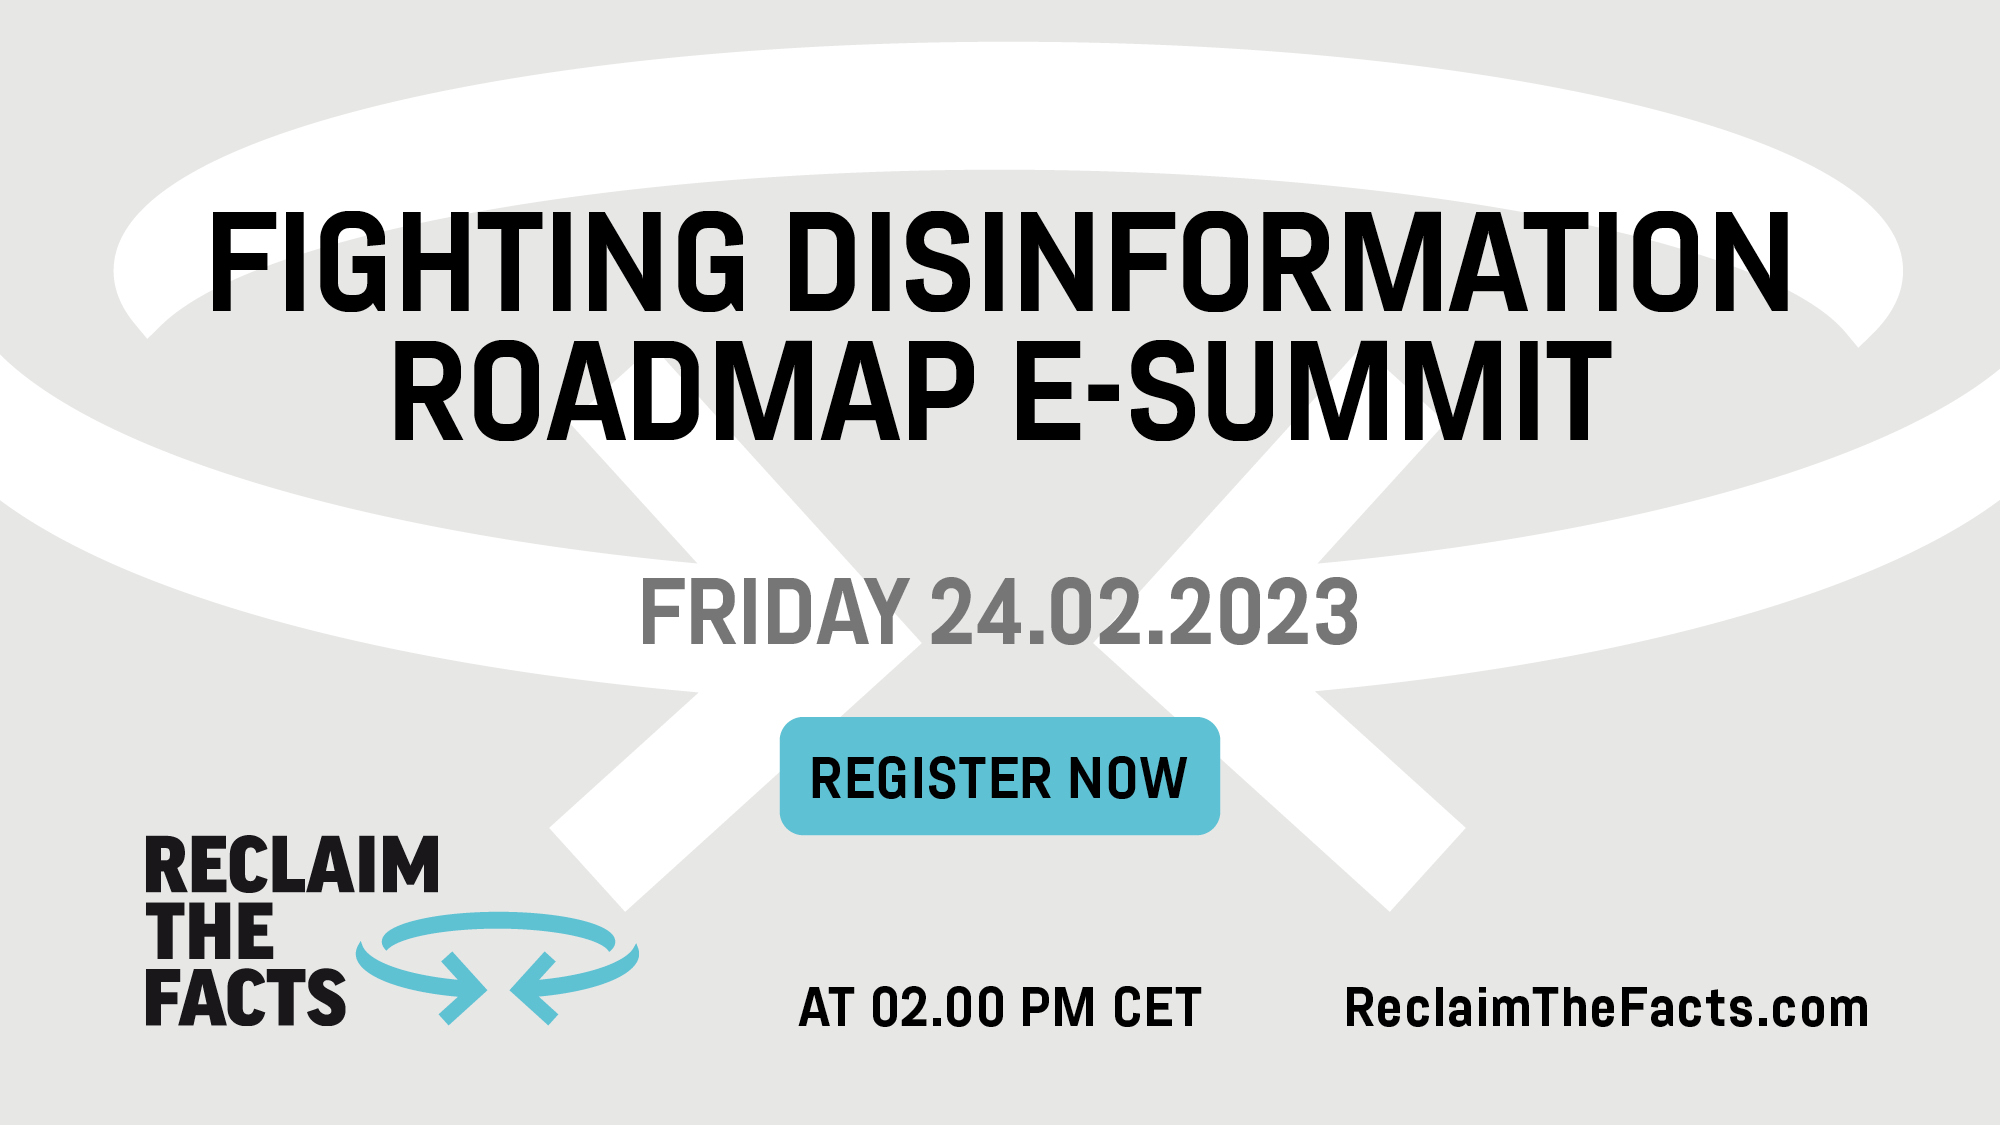 Fighting Disinformation Roadmap E-Summit